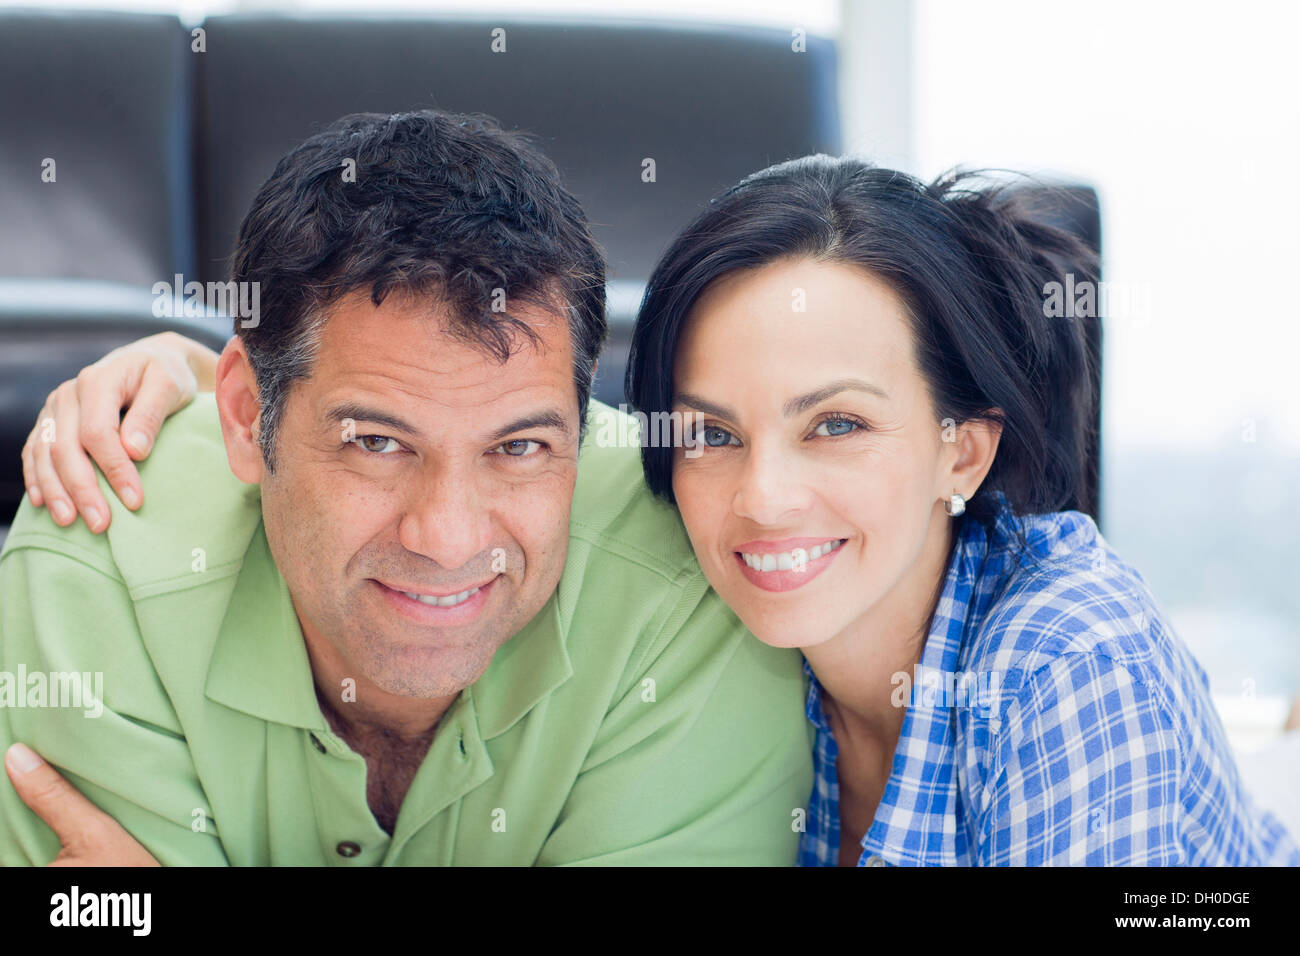 Hispanic couple smiling in living room Stock Photo